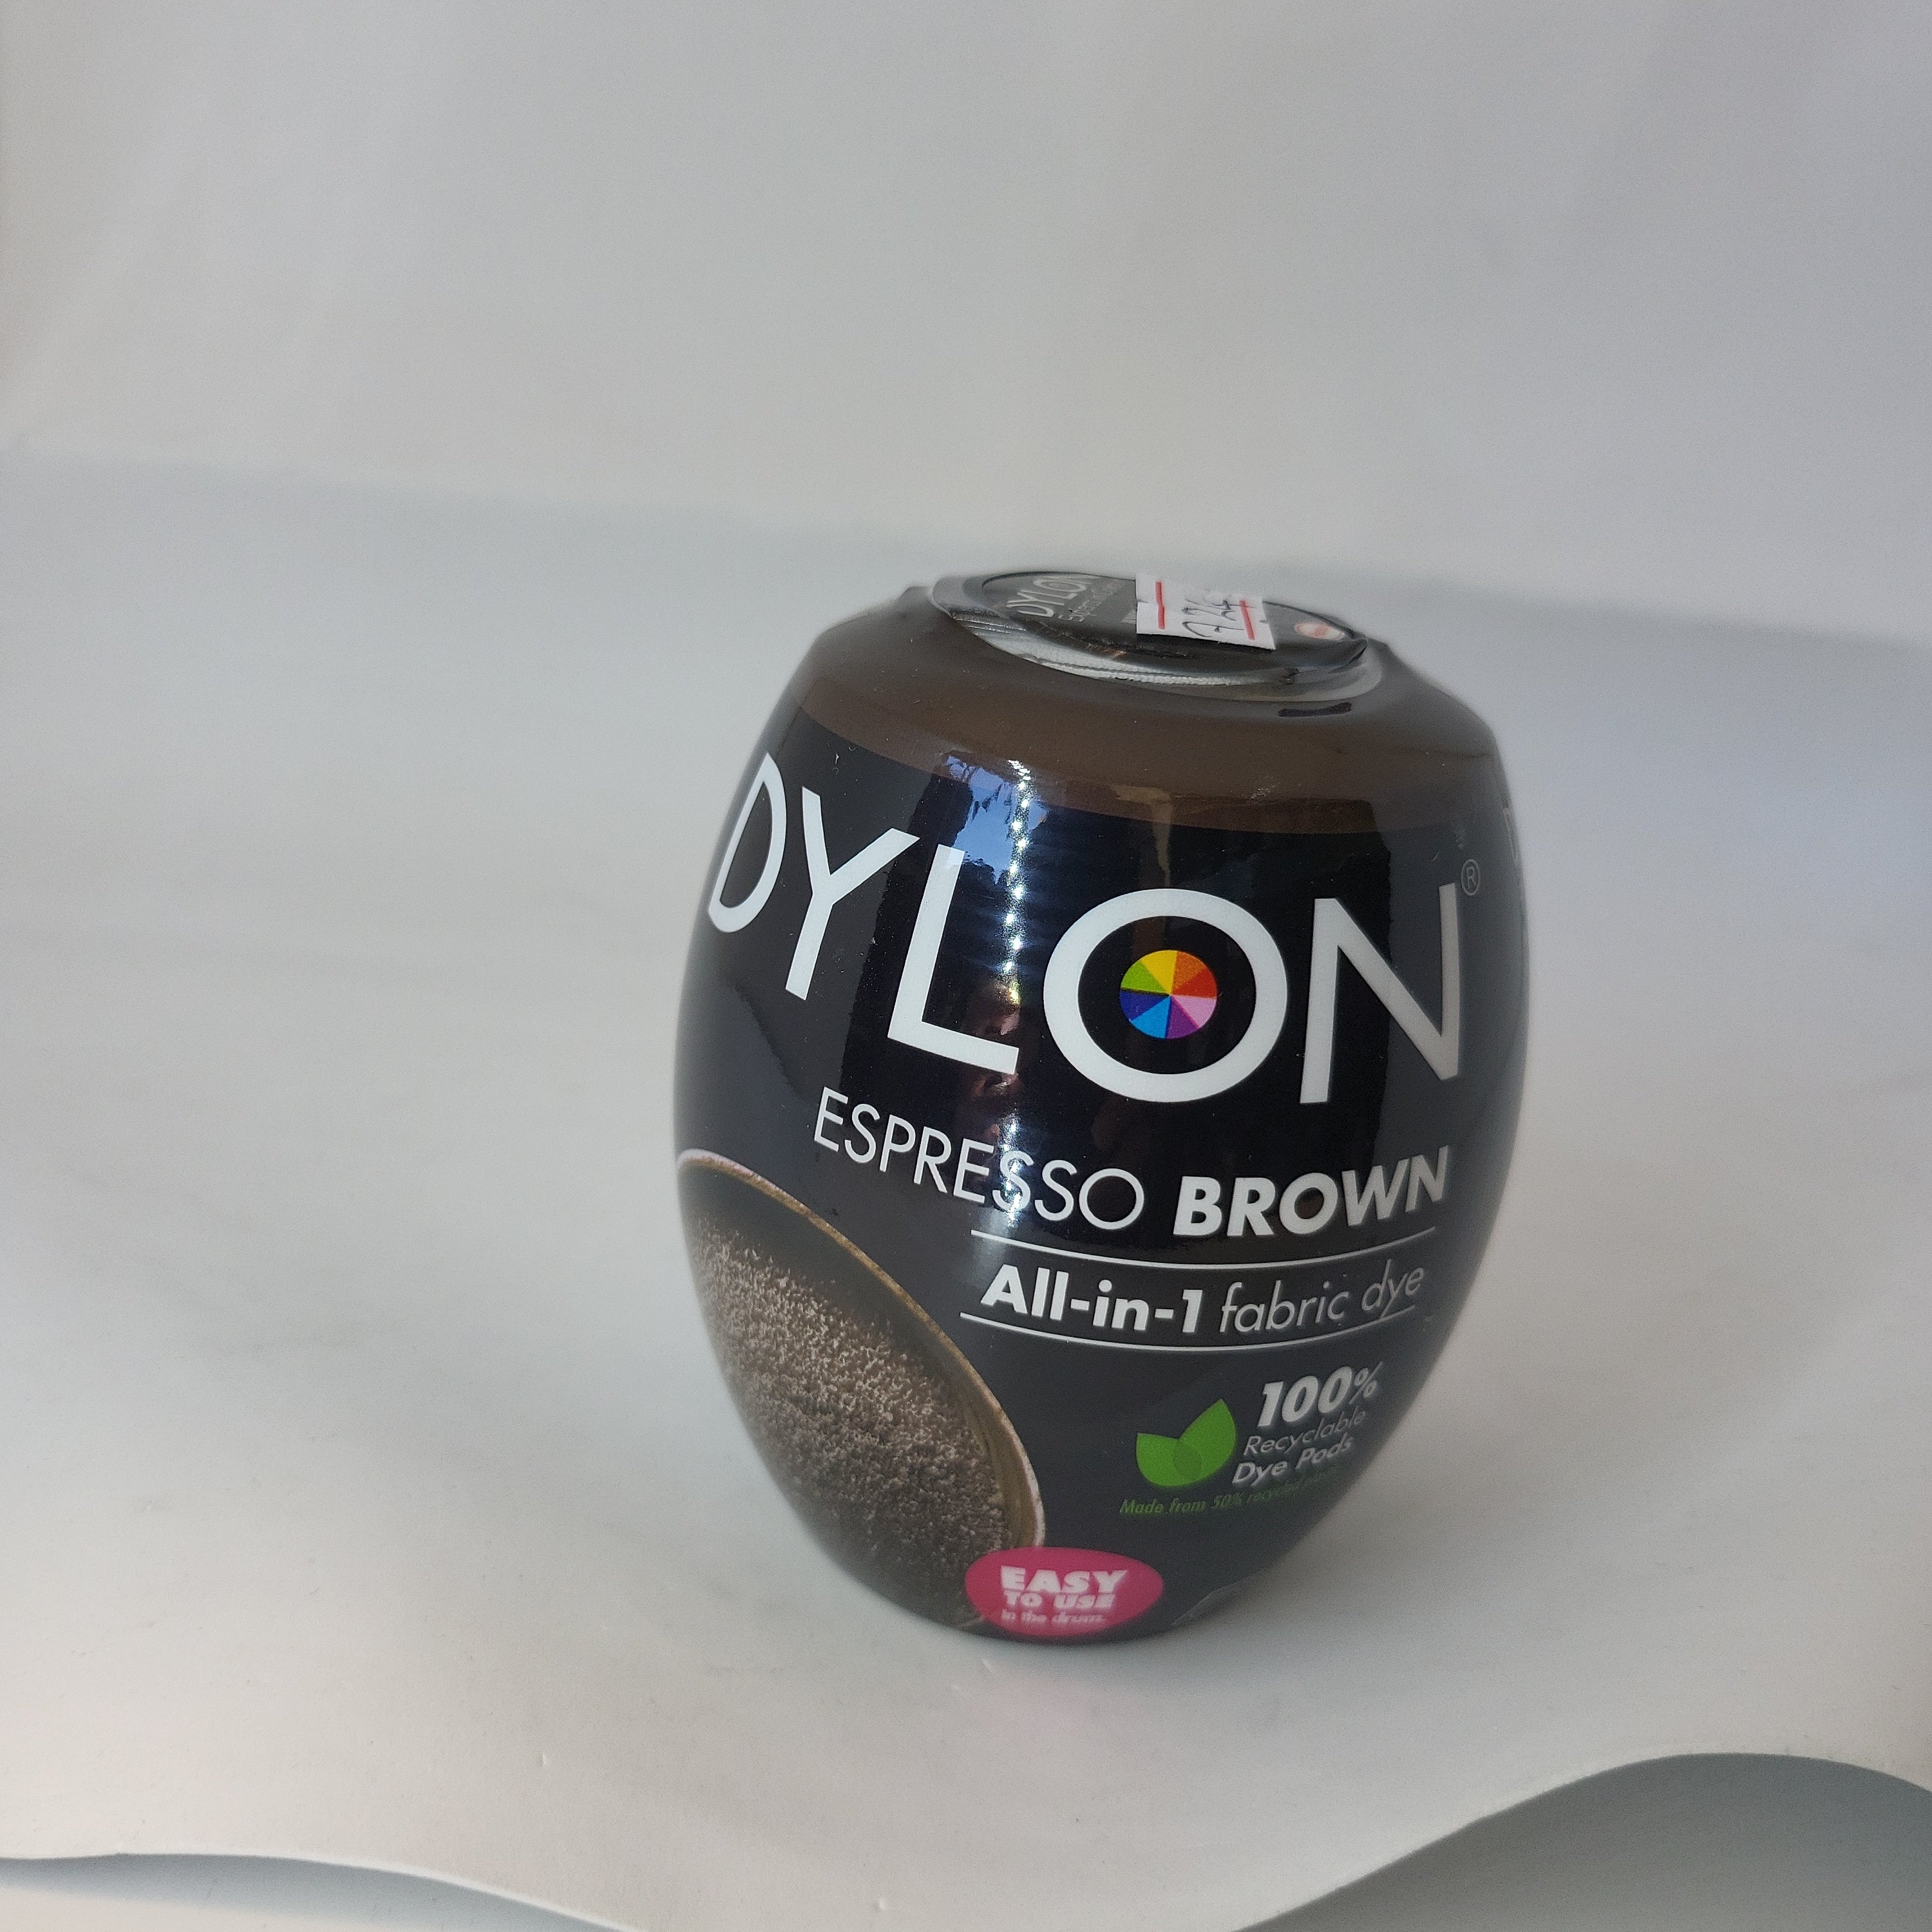 Dylon Fabric Dye: Machine Pod: 11 Espresso Brown – Buttons and